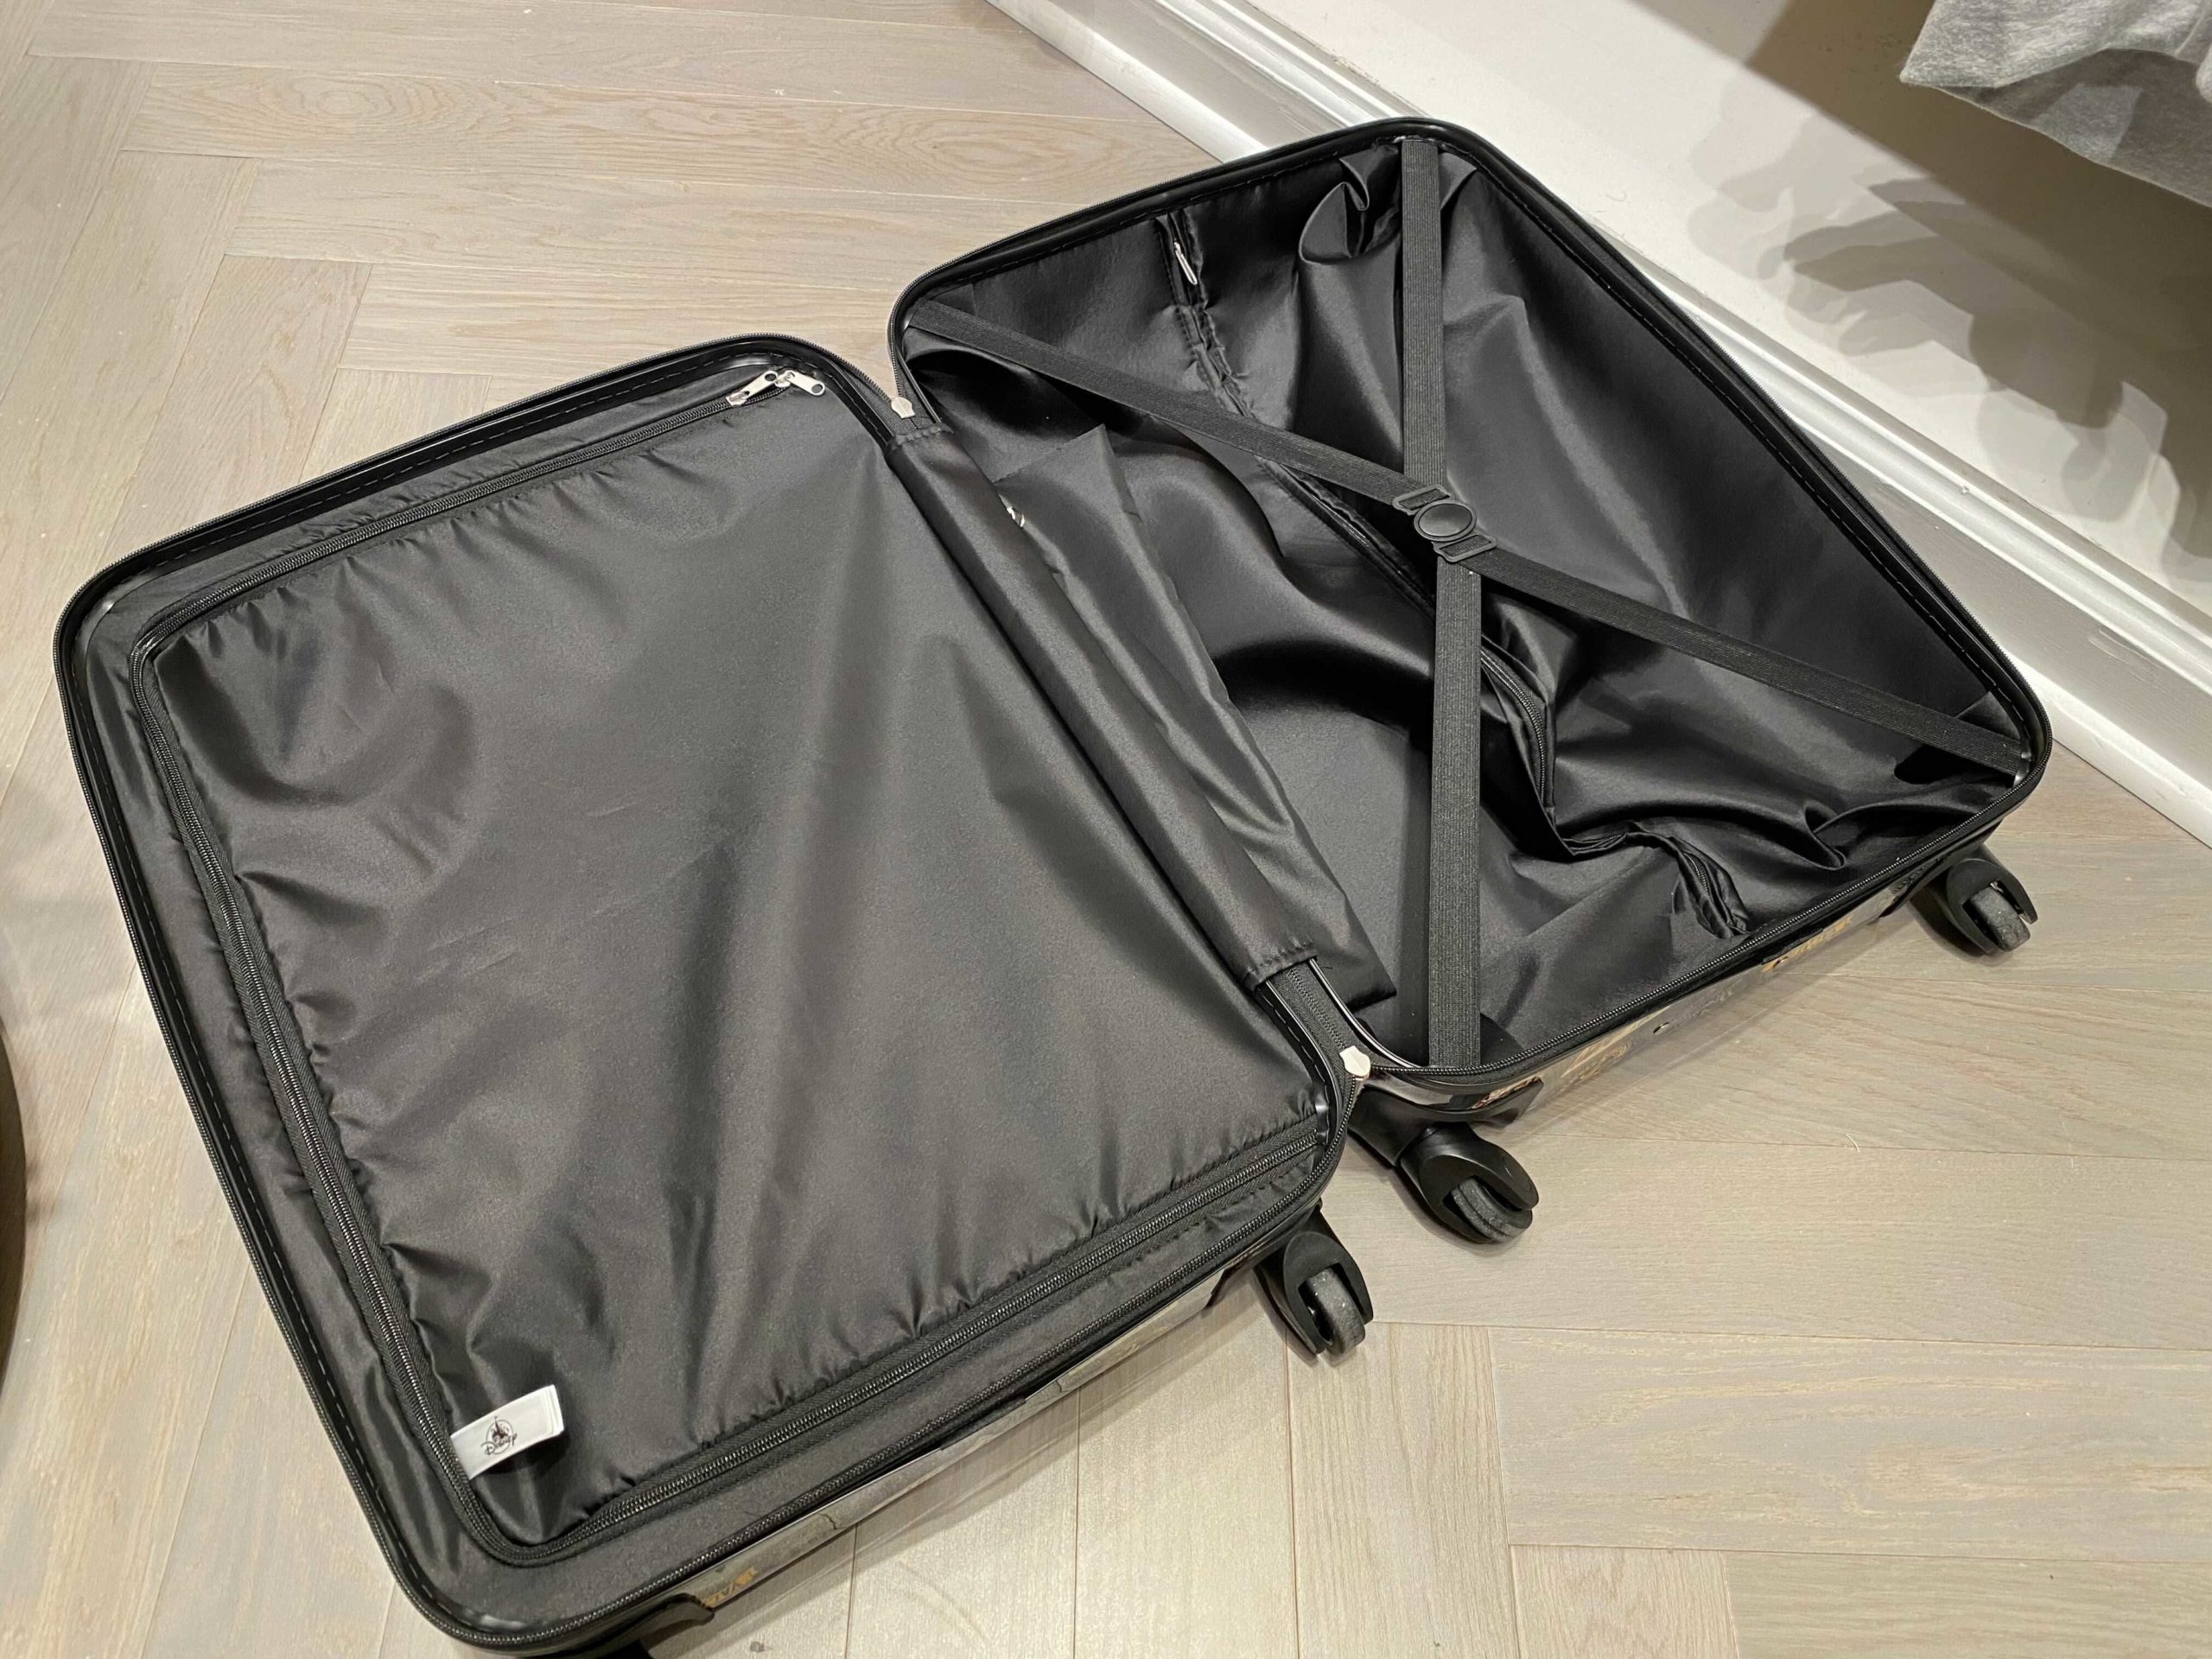 dvc-member-suitcase-6-8979848